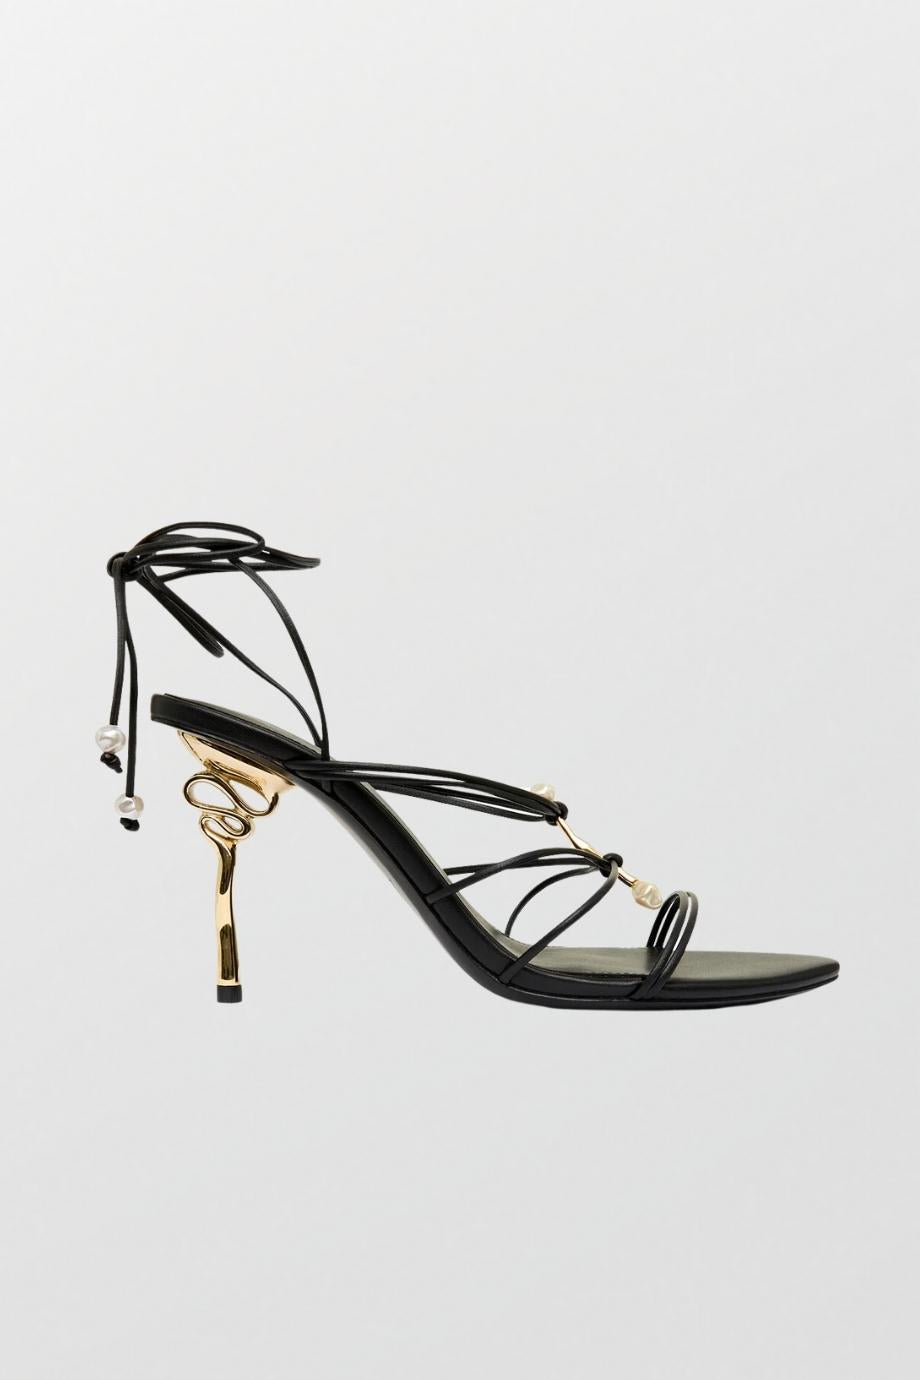 Buy high heels sandals ▷ Flerisa. Audley Shoes Official Online Shop